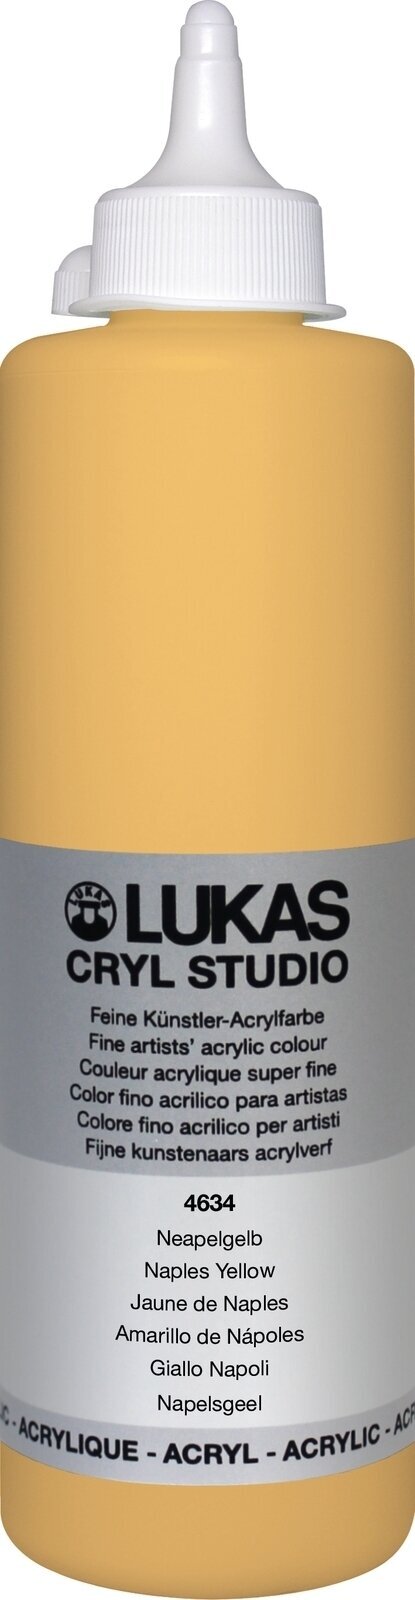 Farba akrylowa Lukas Cryl Studio Acrylic Paint Plastic Bottle Farba akrylowa Naples Yellow 500 ml 1 szt